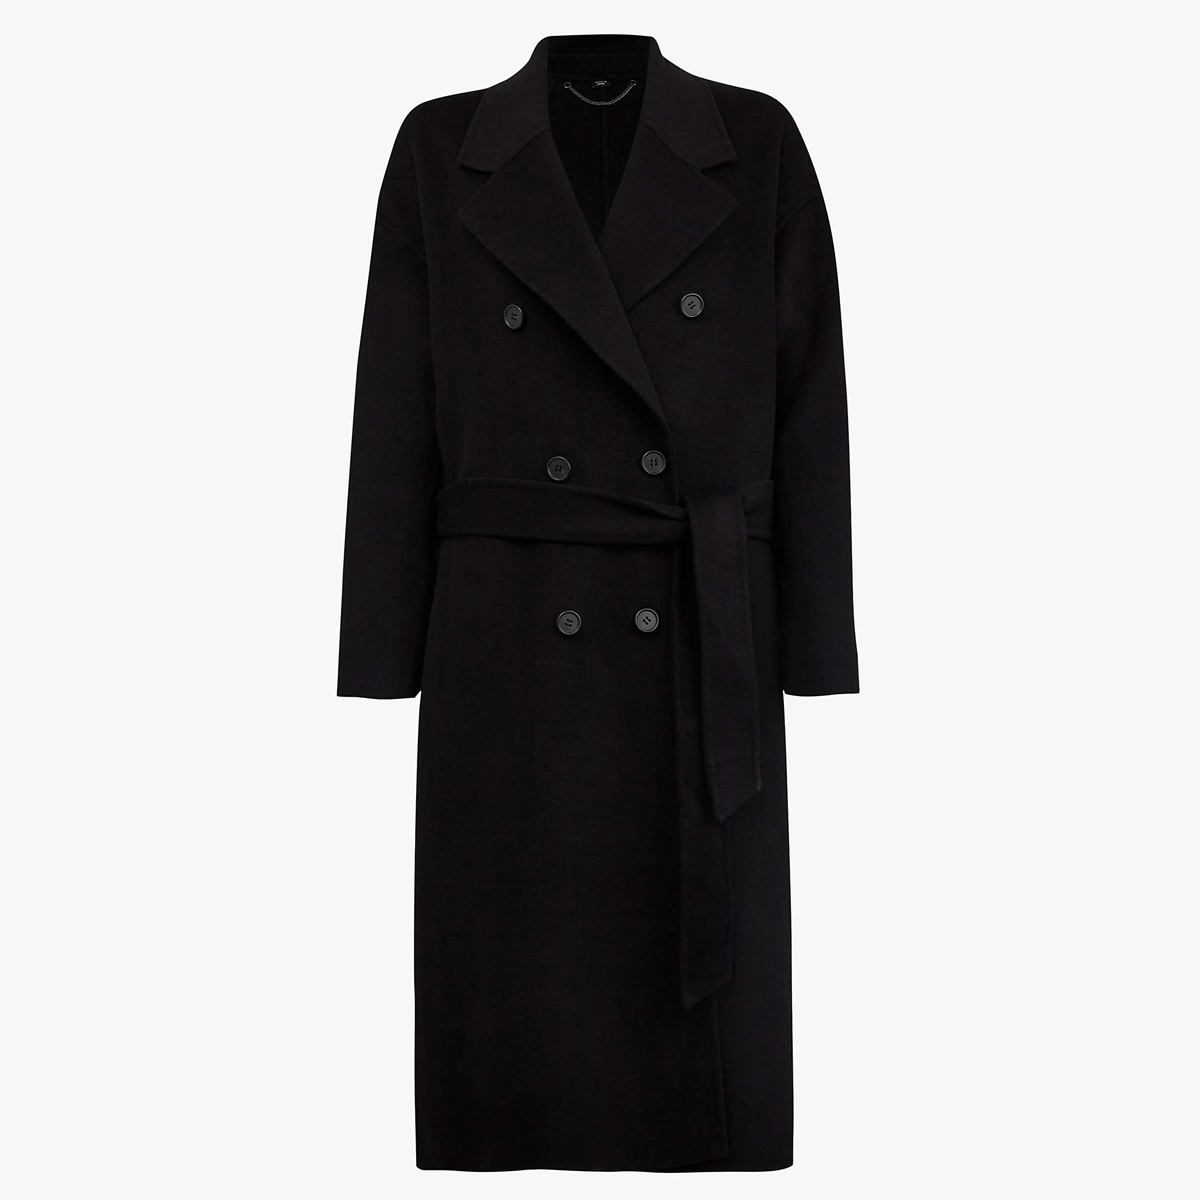 The 25 Best Black Wool Coats To Add, Best Black Wool Pea Coat